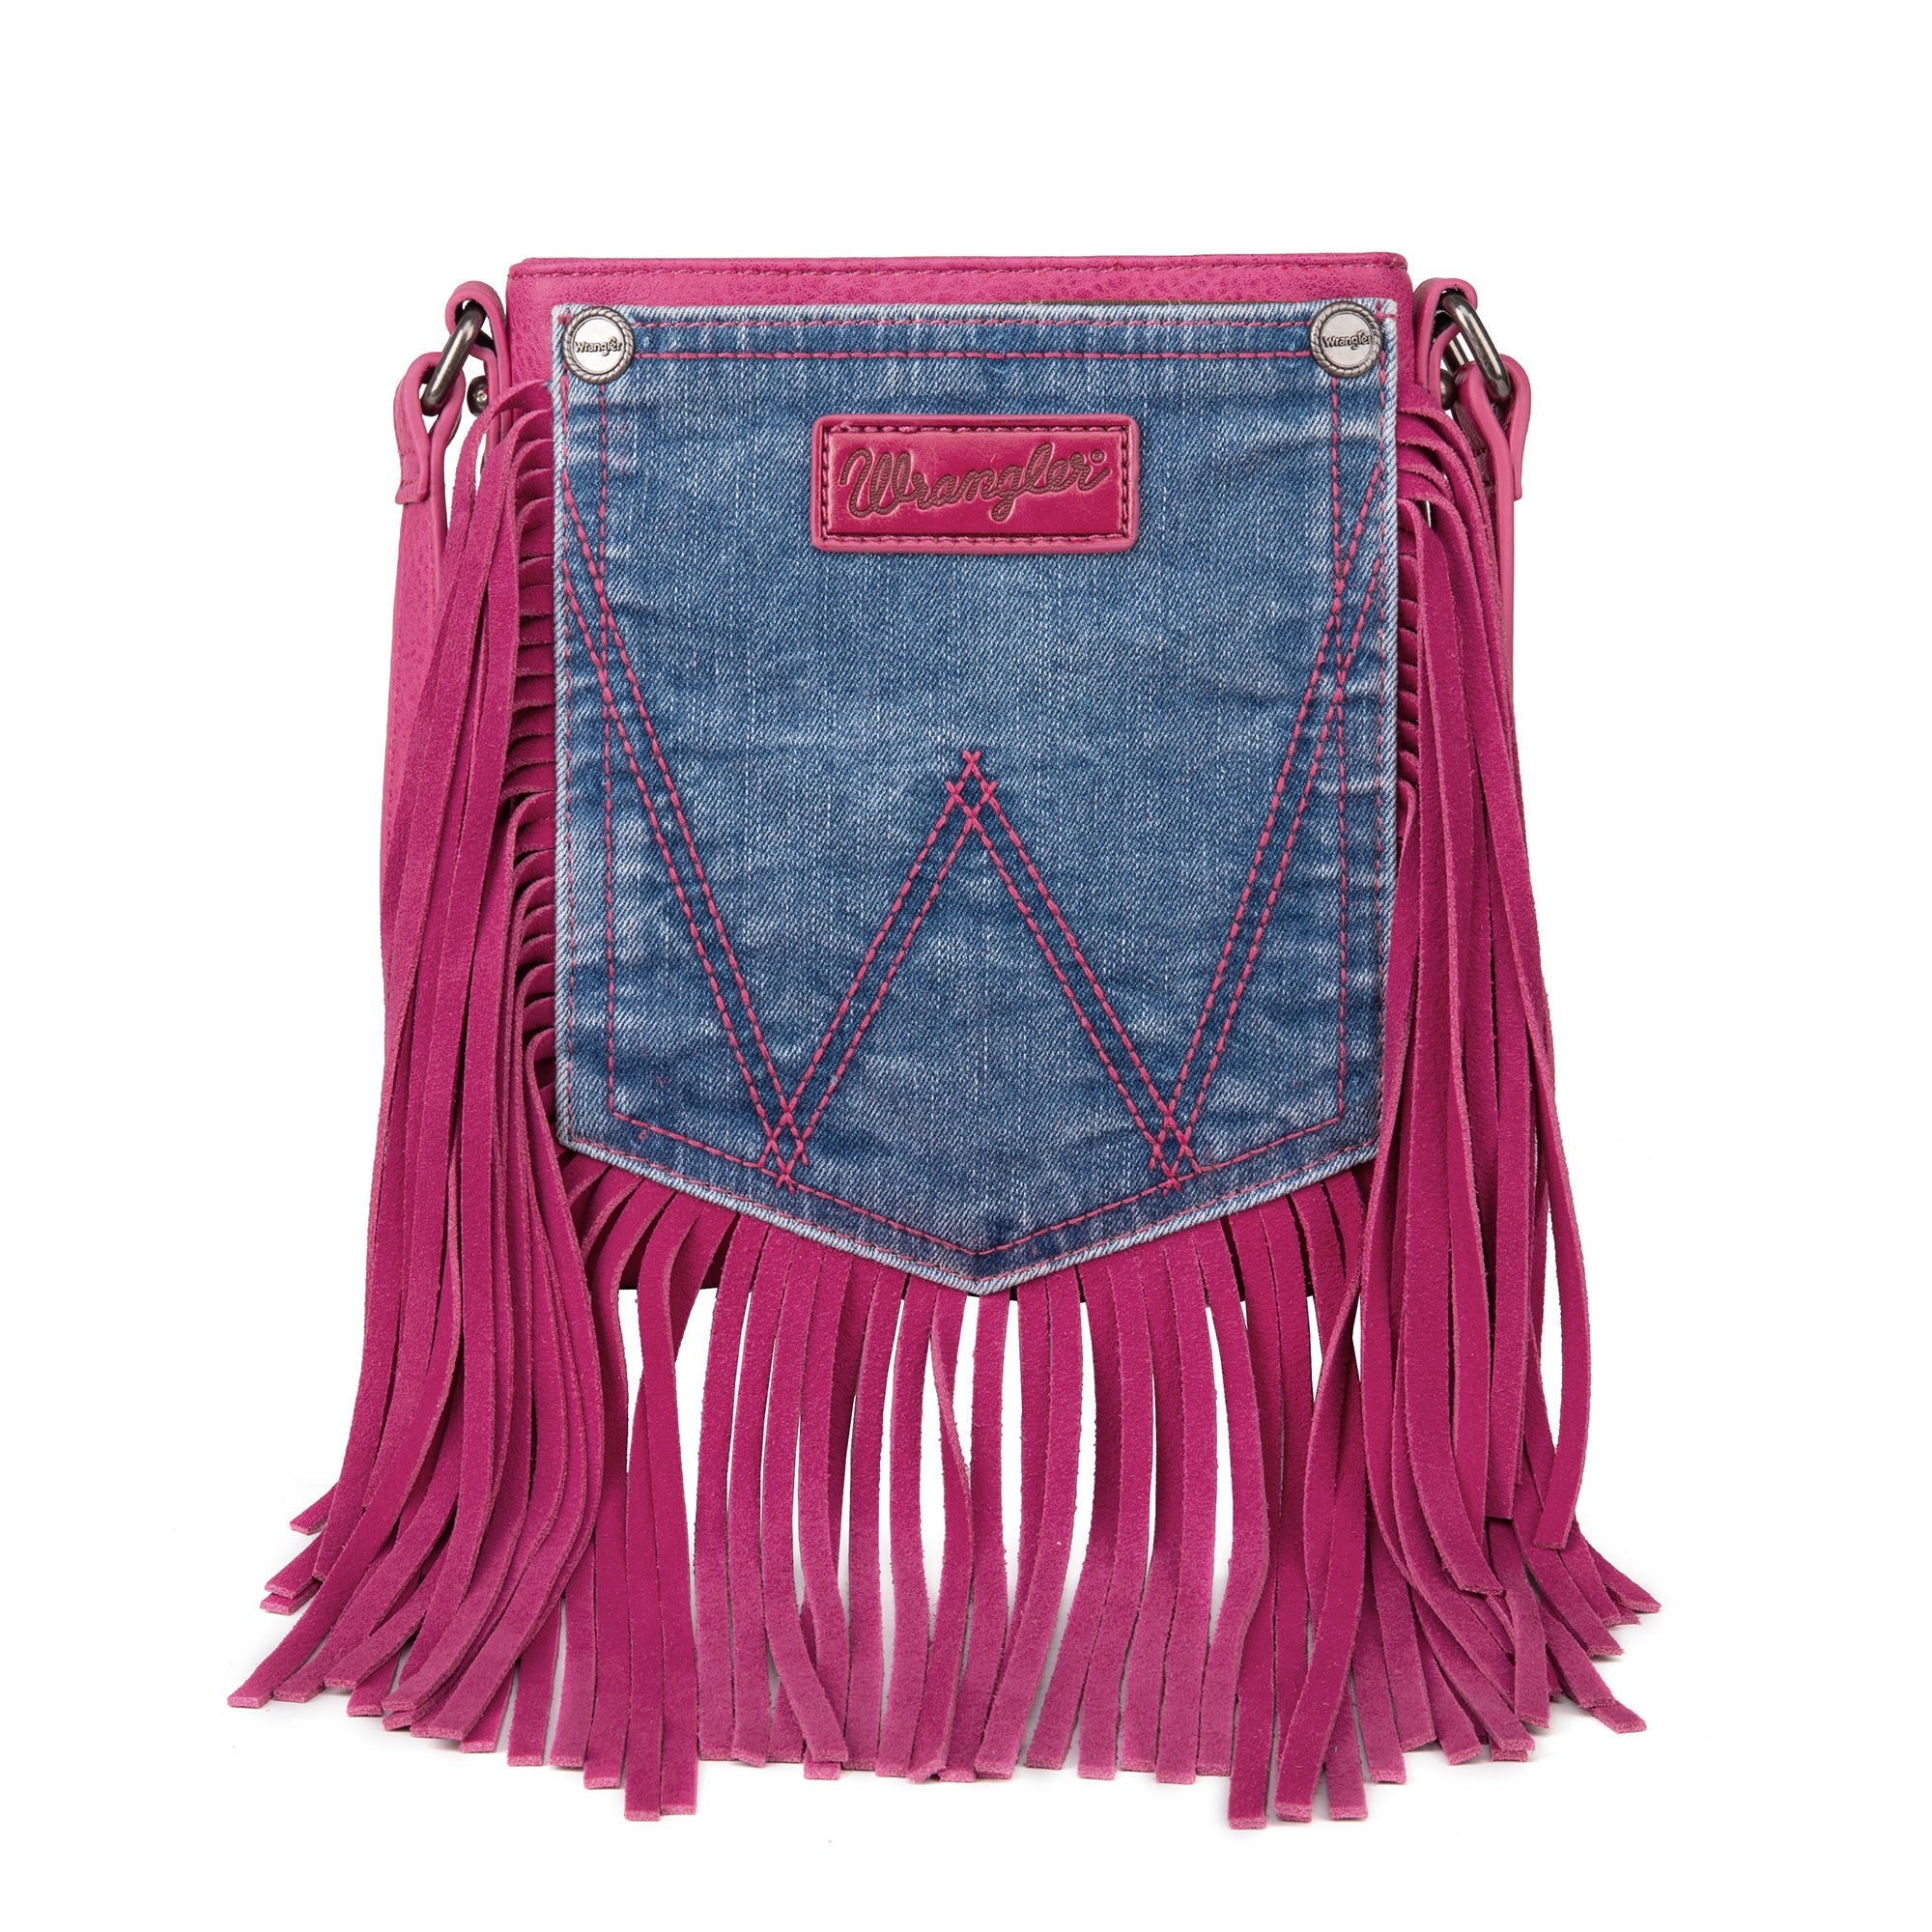 Wrangler Hot Pink Leather Fringe Jean Denim Pocket Crossbody - Montana West World